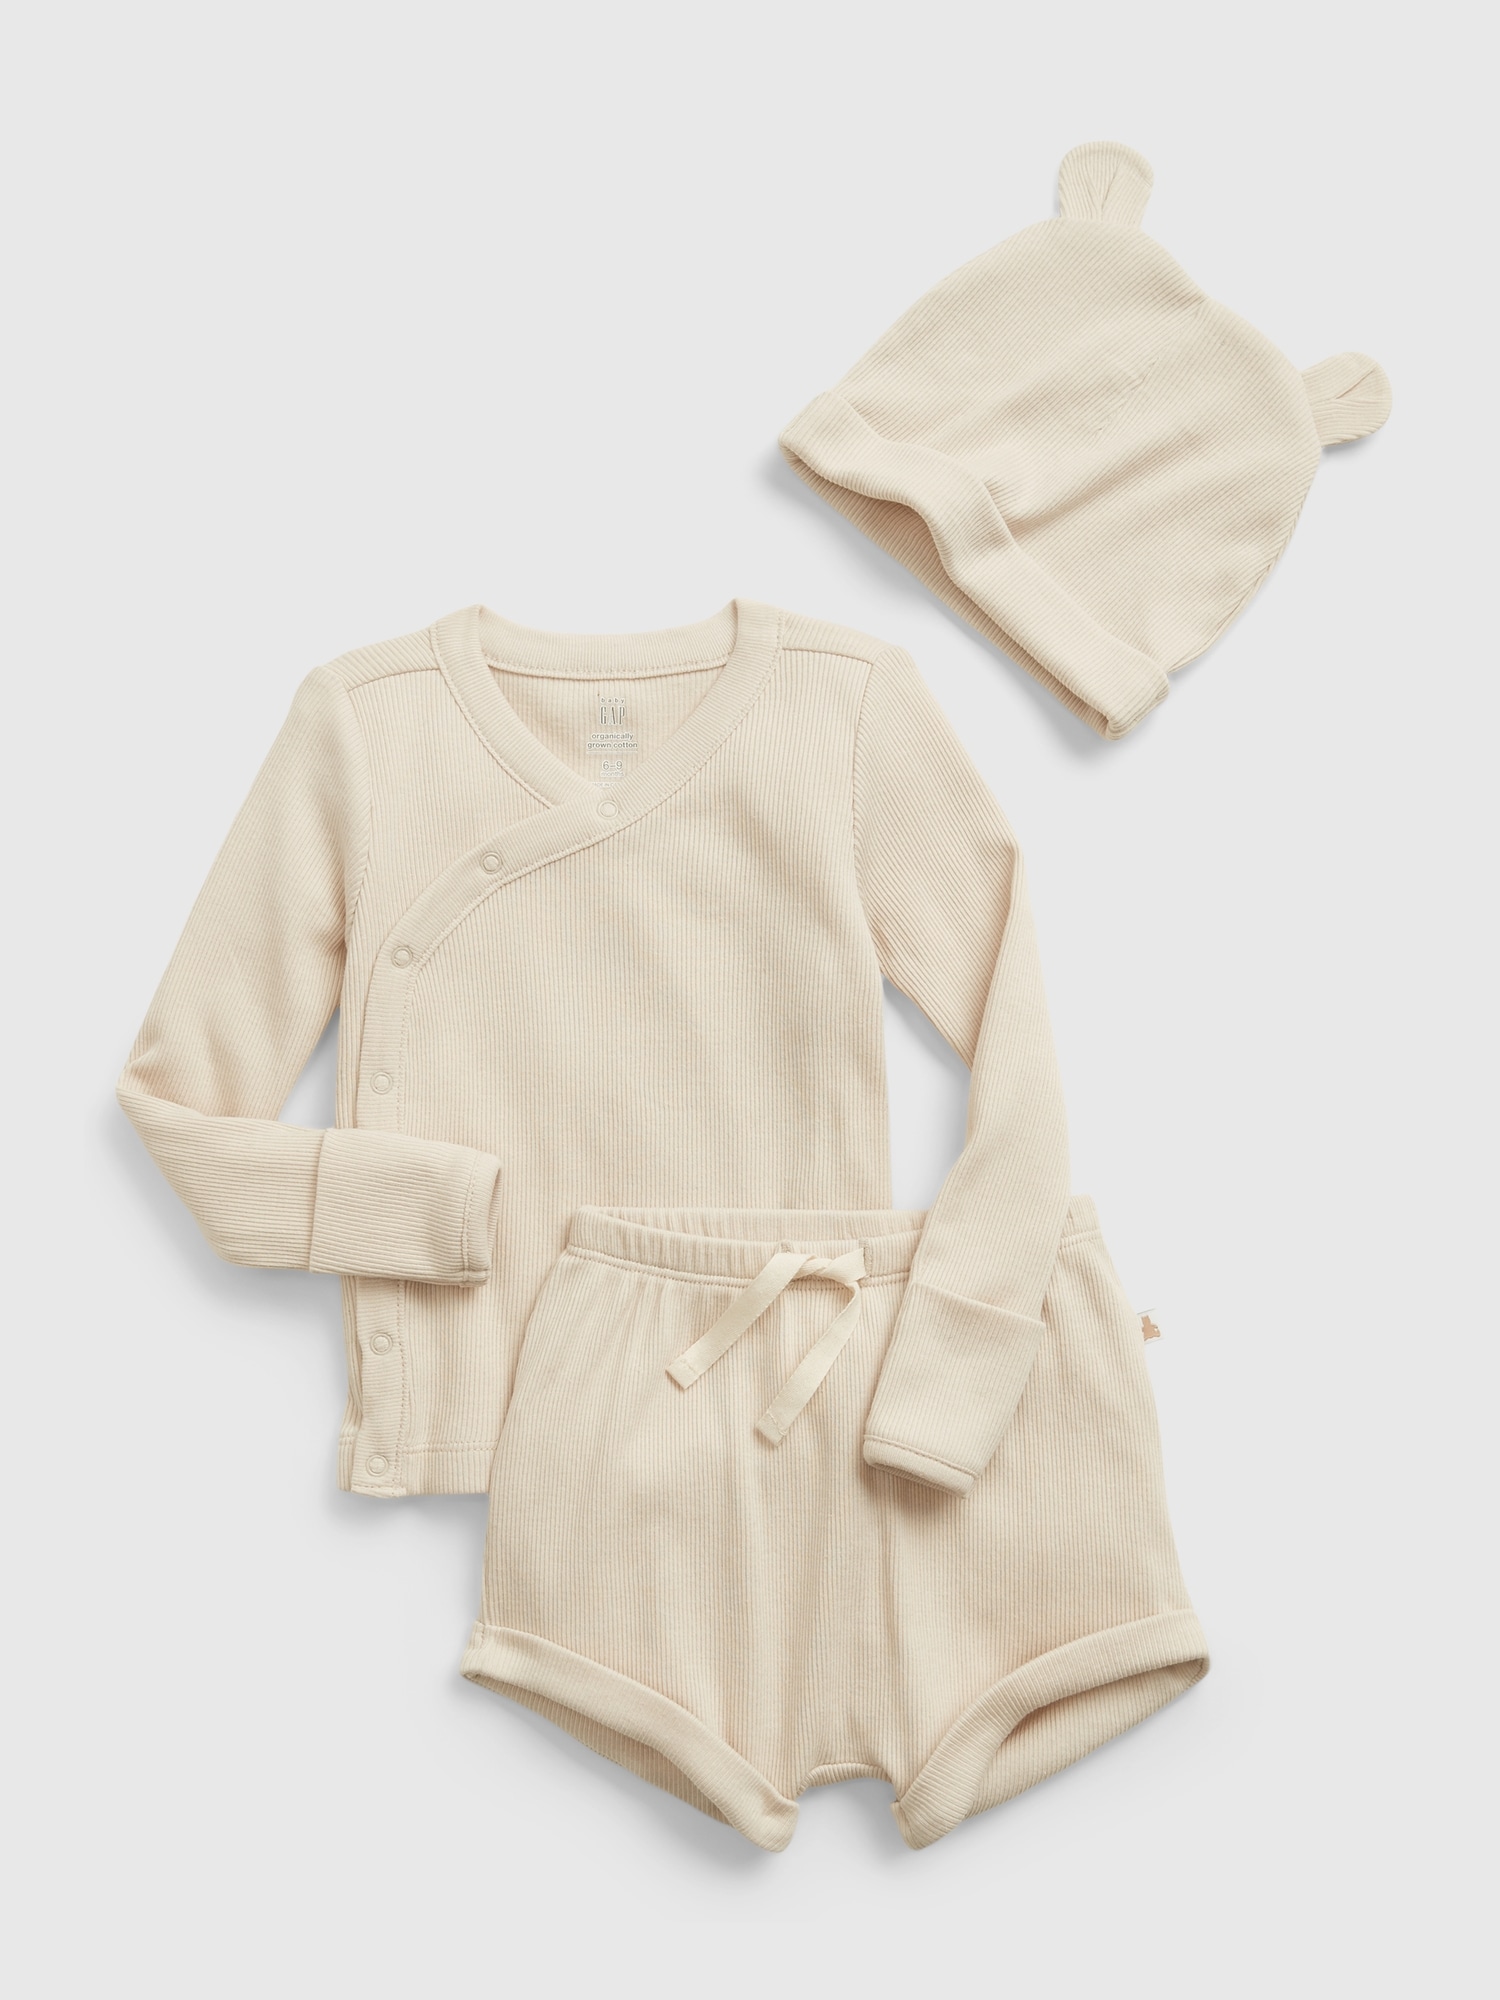 Baby 100% Organic Cotton Outfit Set | Gap